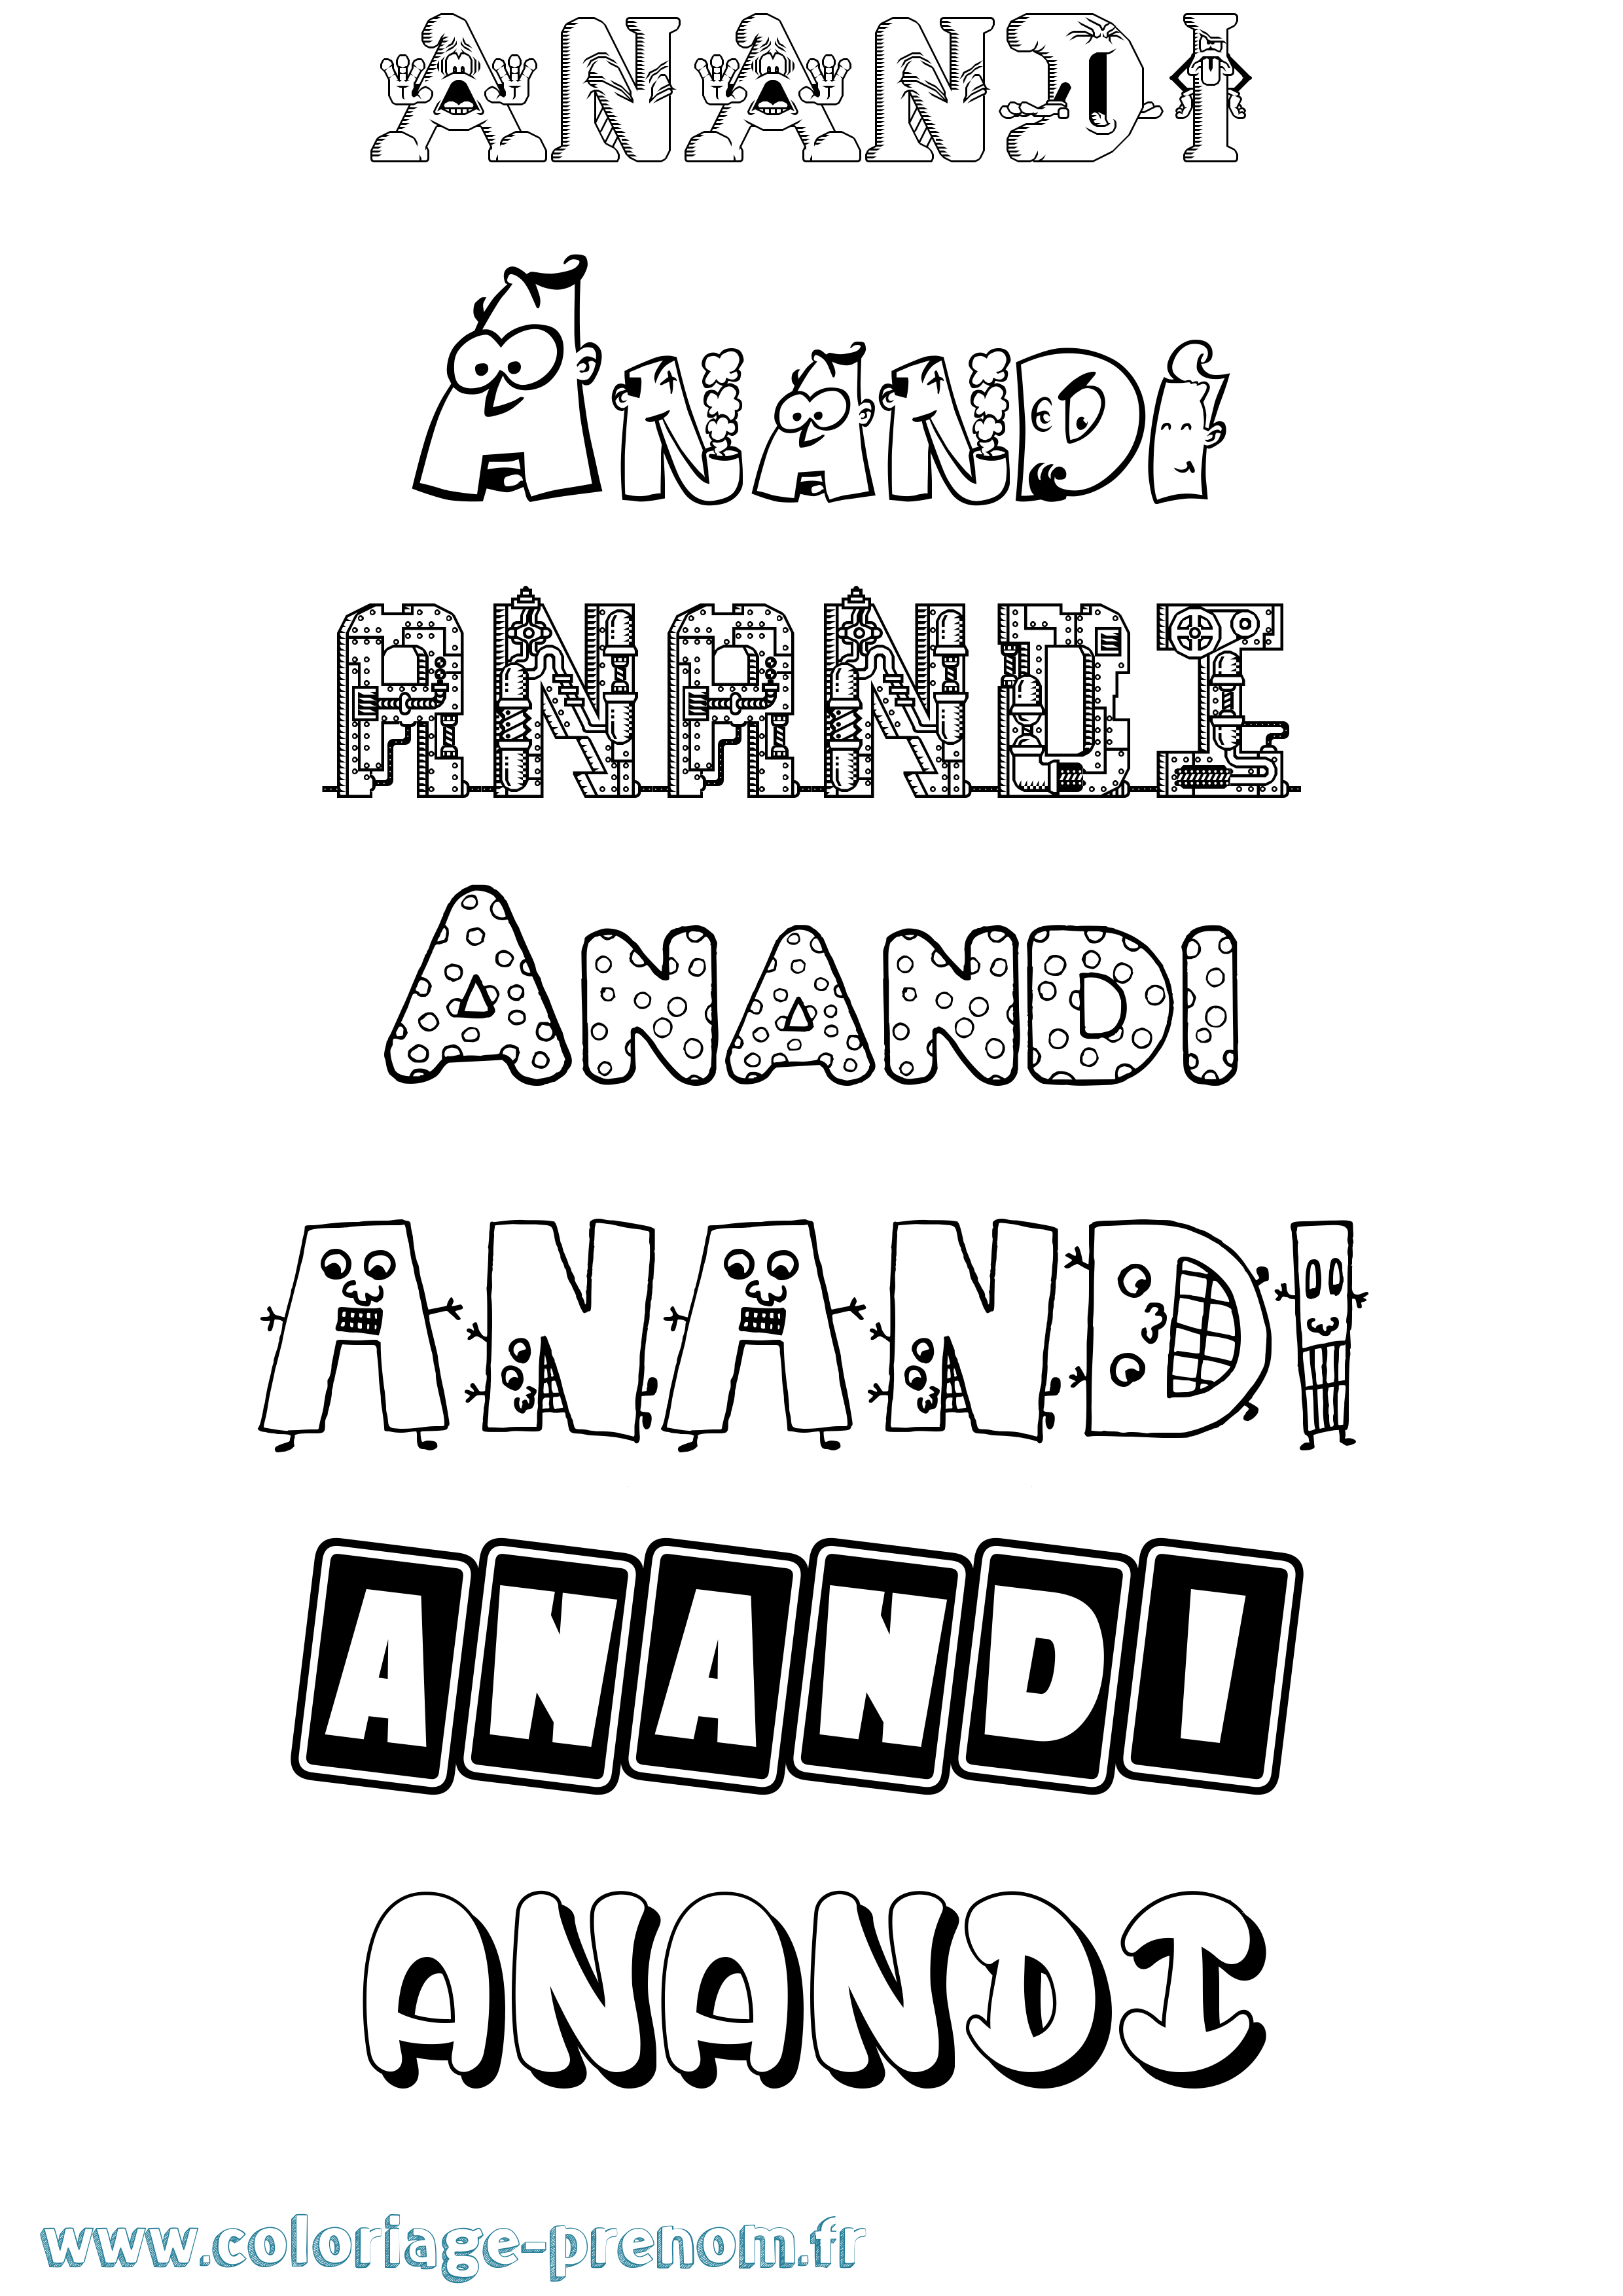 Coloriage prénom Anandi Fun